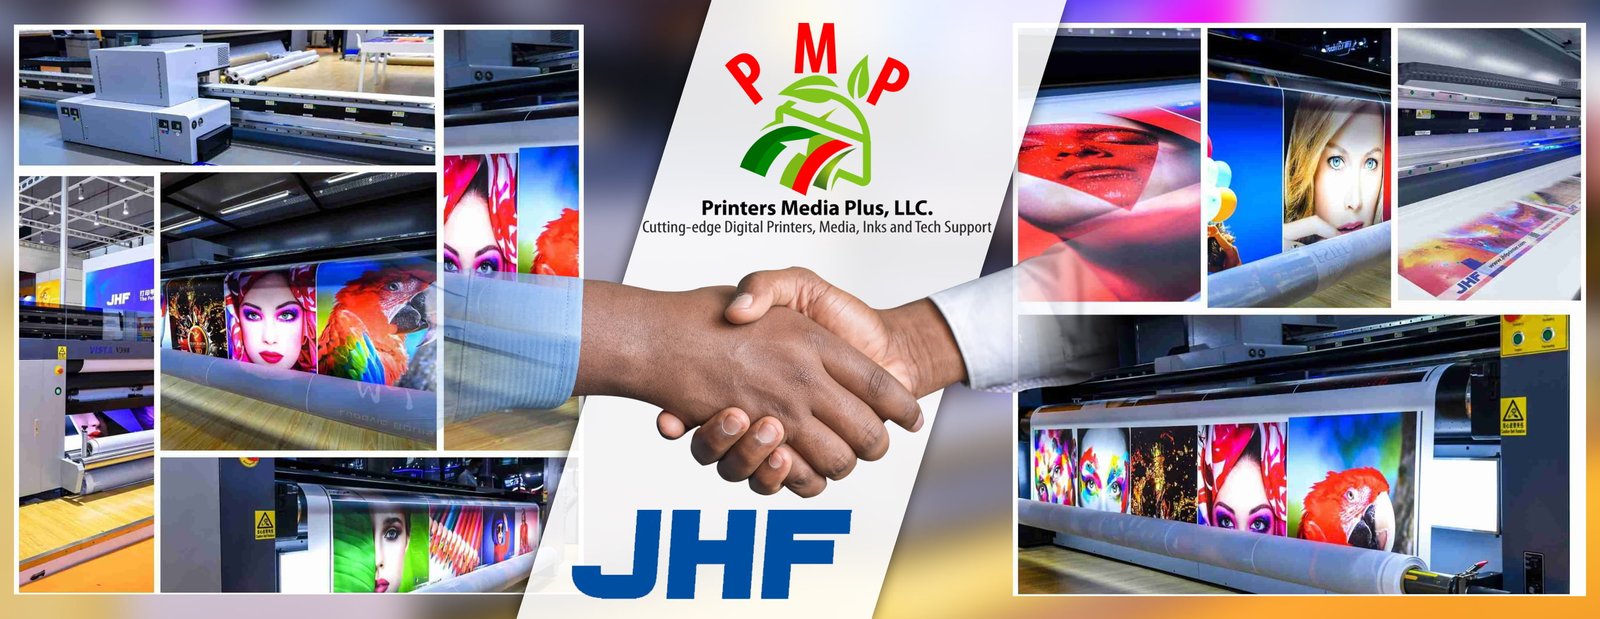 JHF Printers-Printer Media Plus, LLC